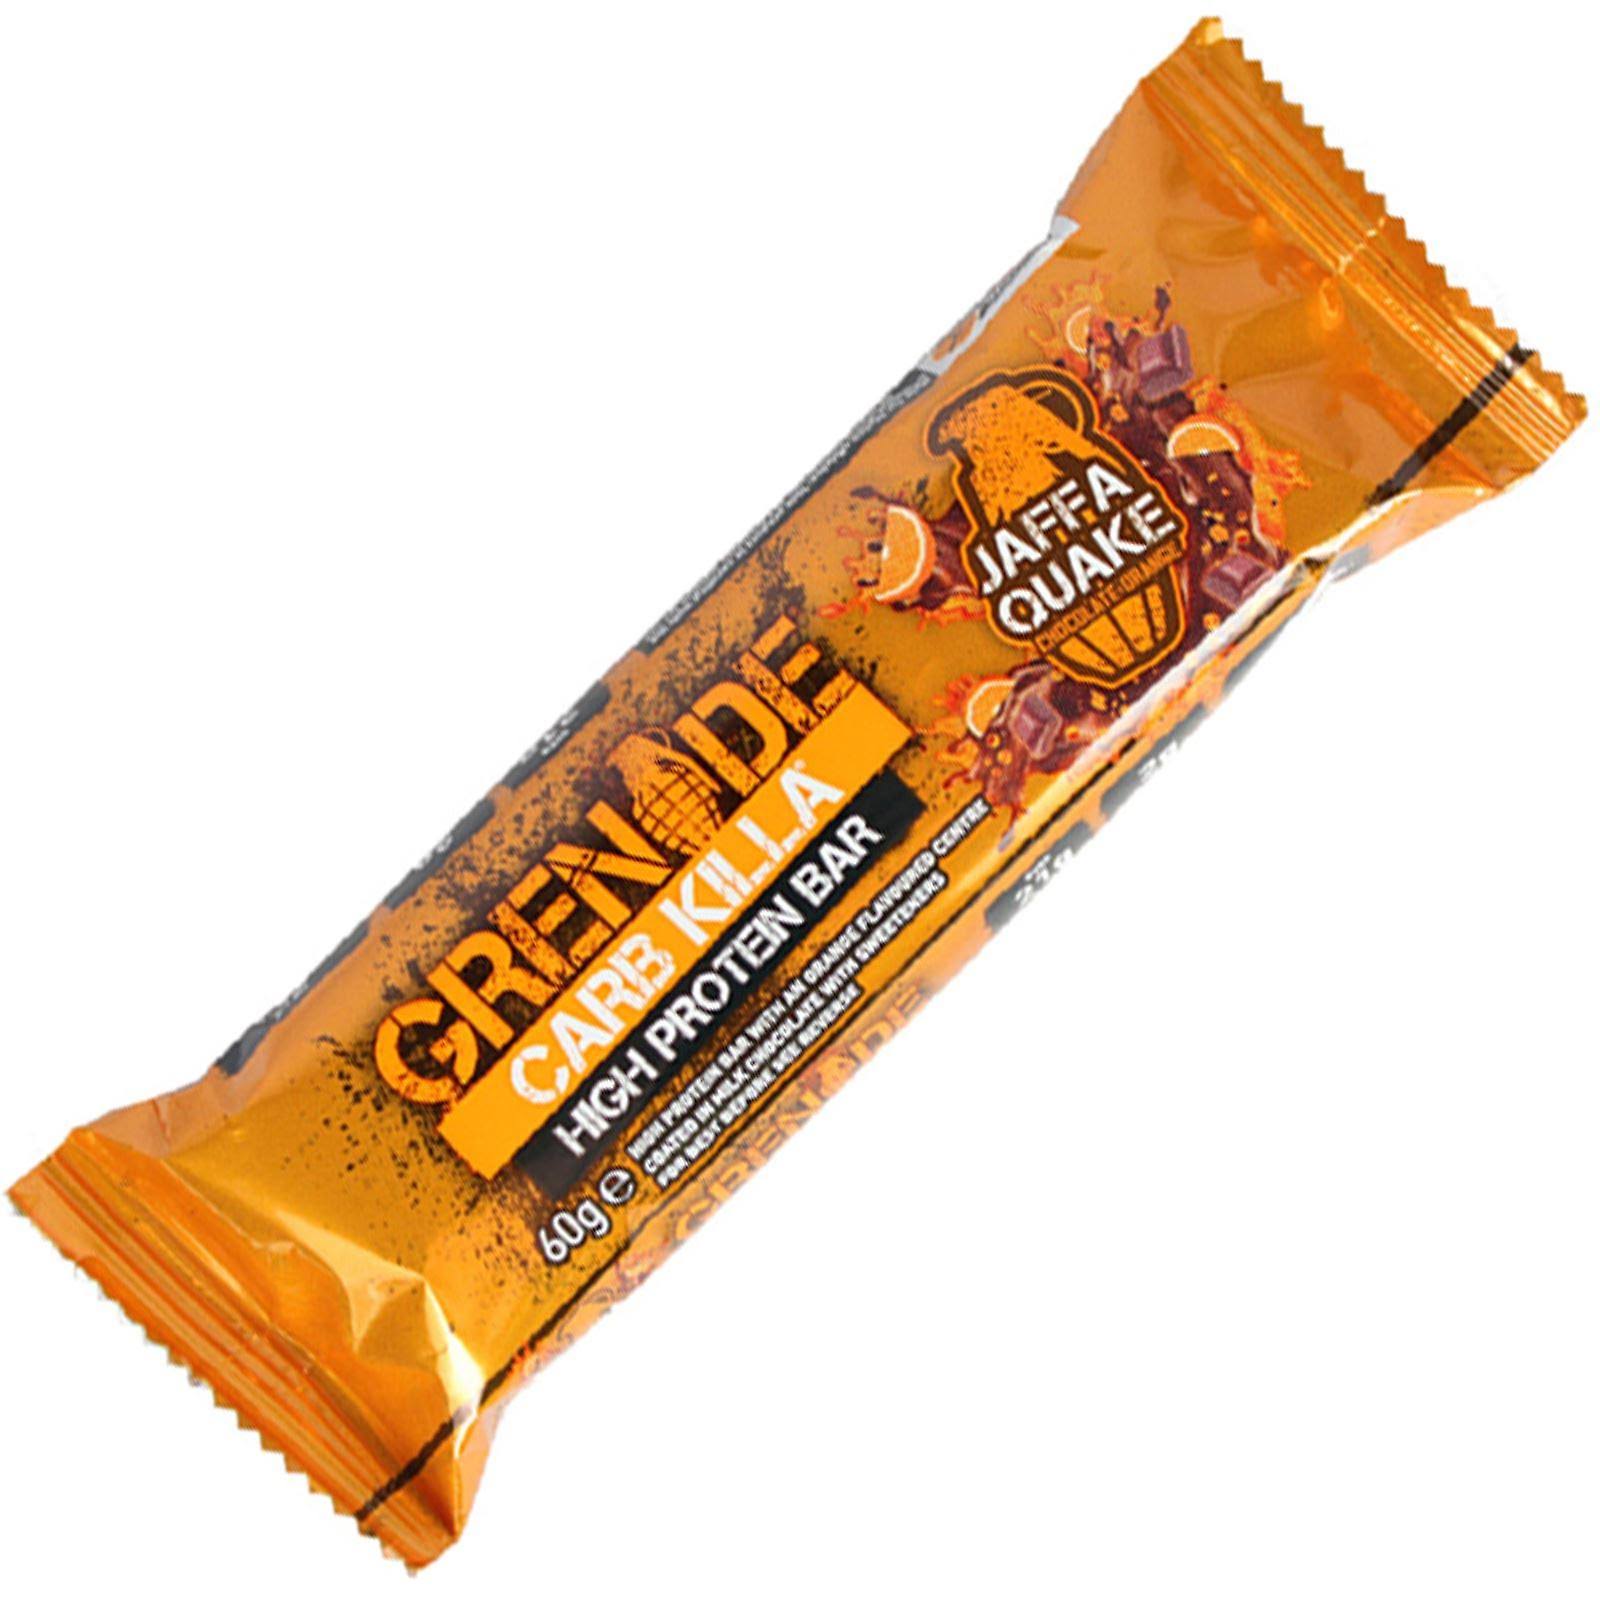 Grenade Carb Killa High Protein Bar - Jaffa Quake Chocolate Orange, 60g